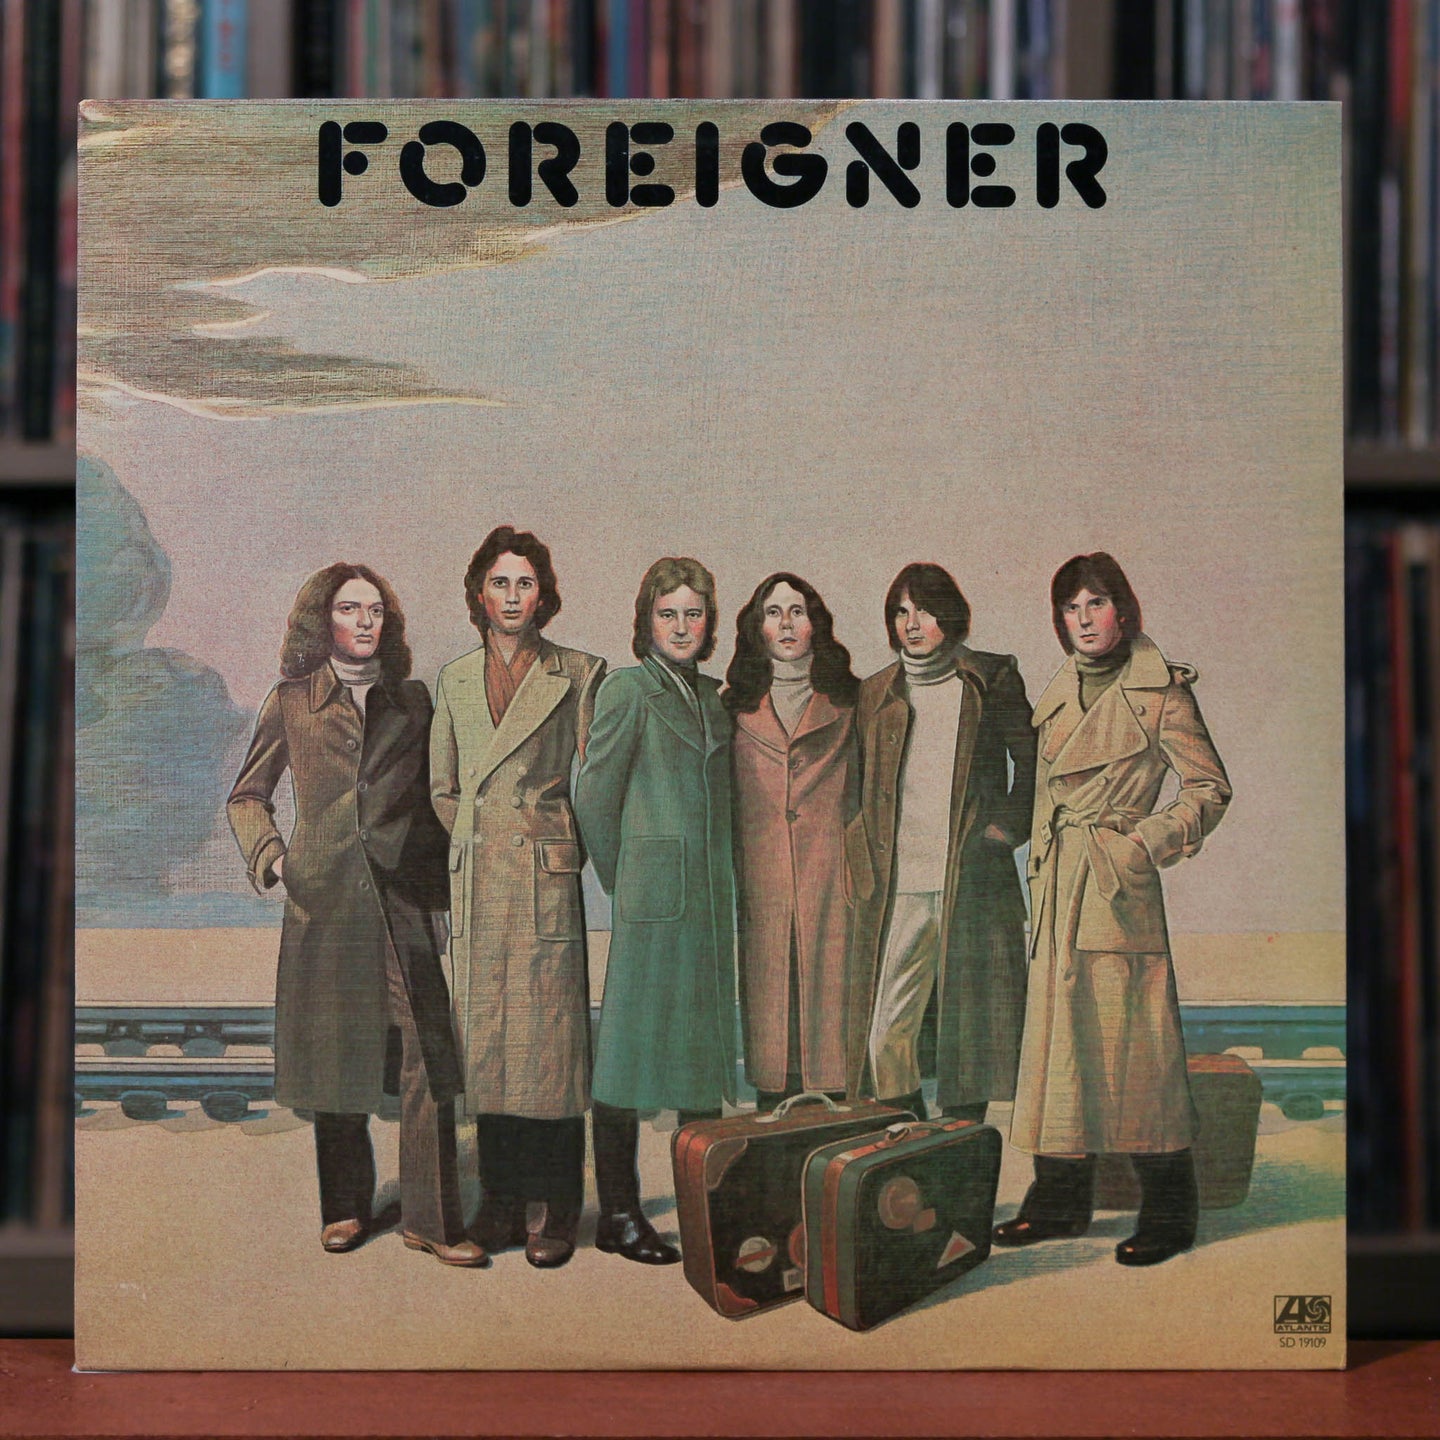 Foreigner - 4 ALBUM BUNDLE - Foreigner, Double Vision, Head Games & #4